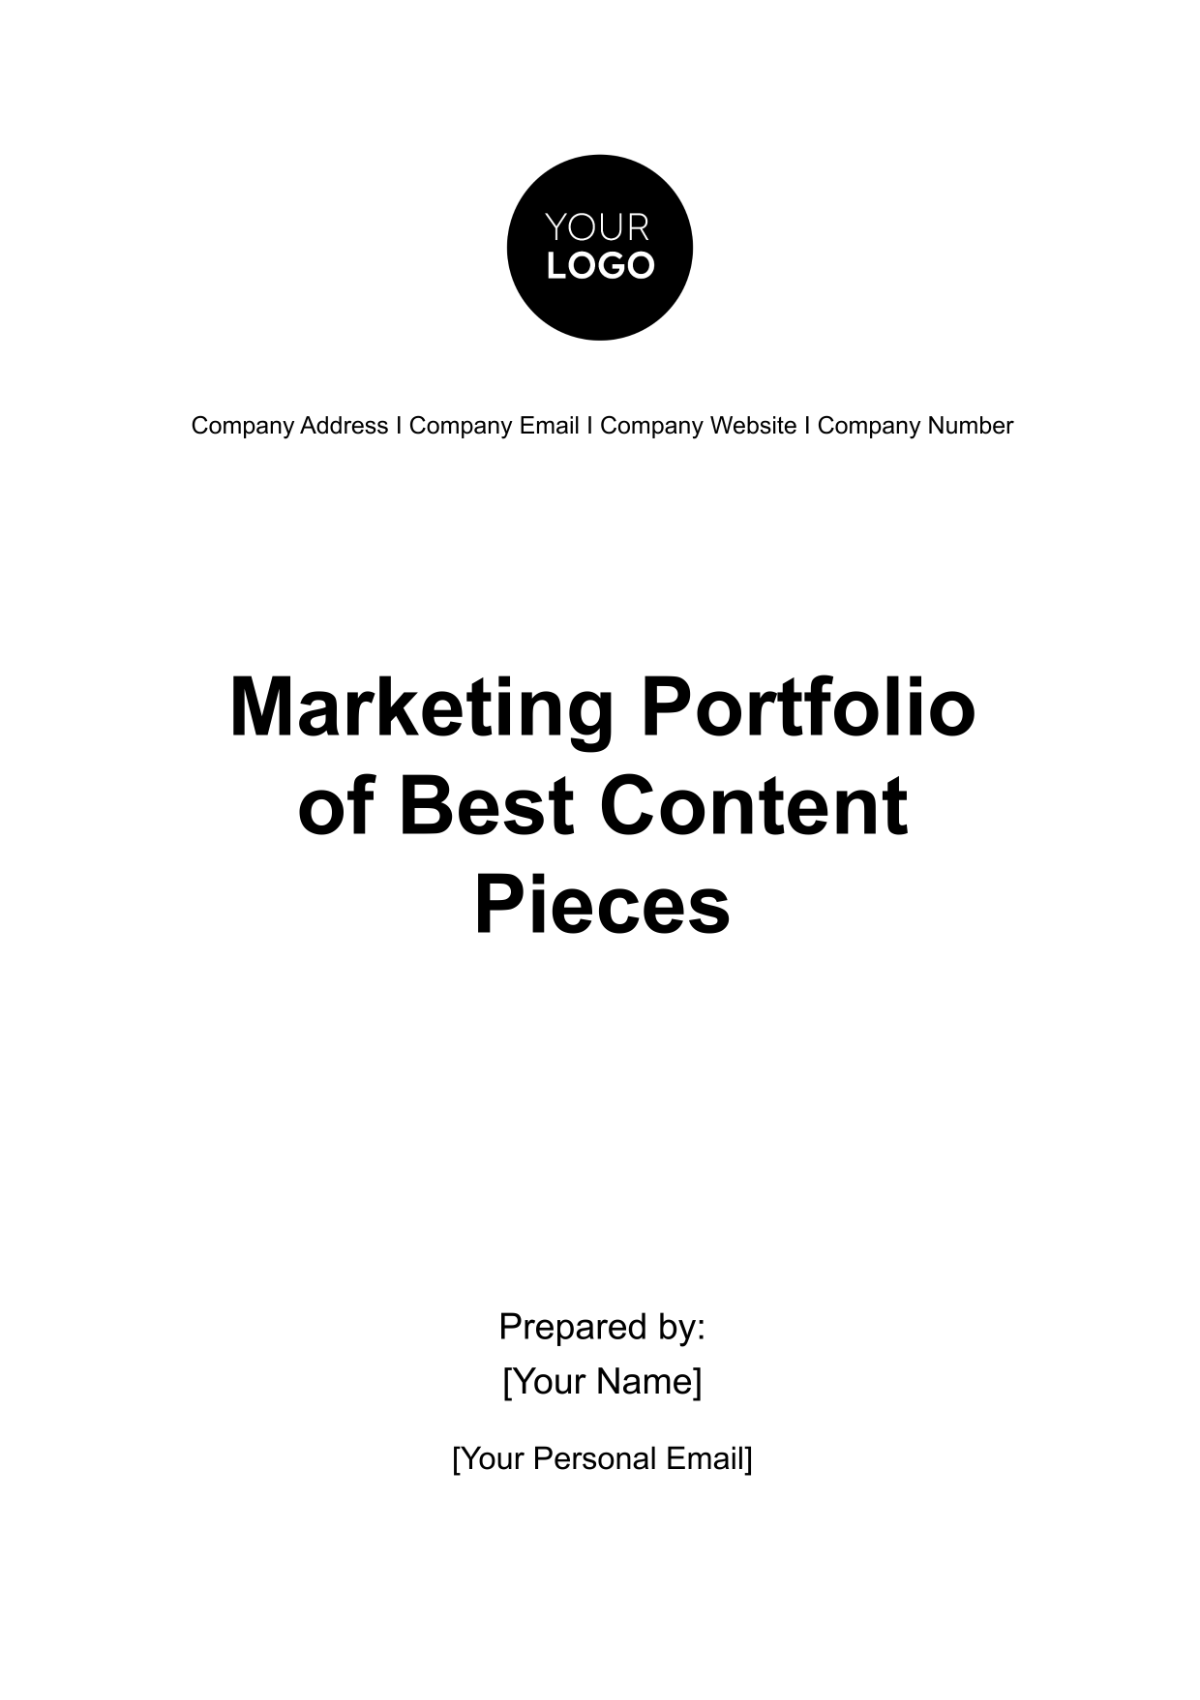 Free Marketing Portfolio of Best Content Pieces Template